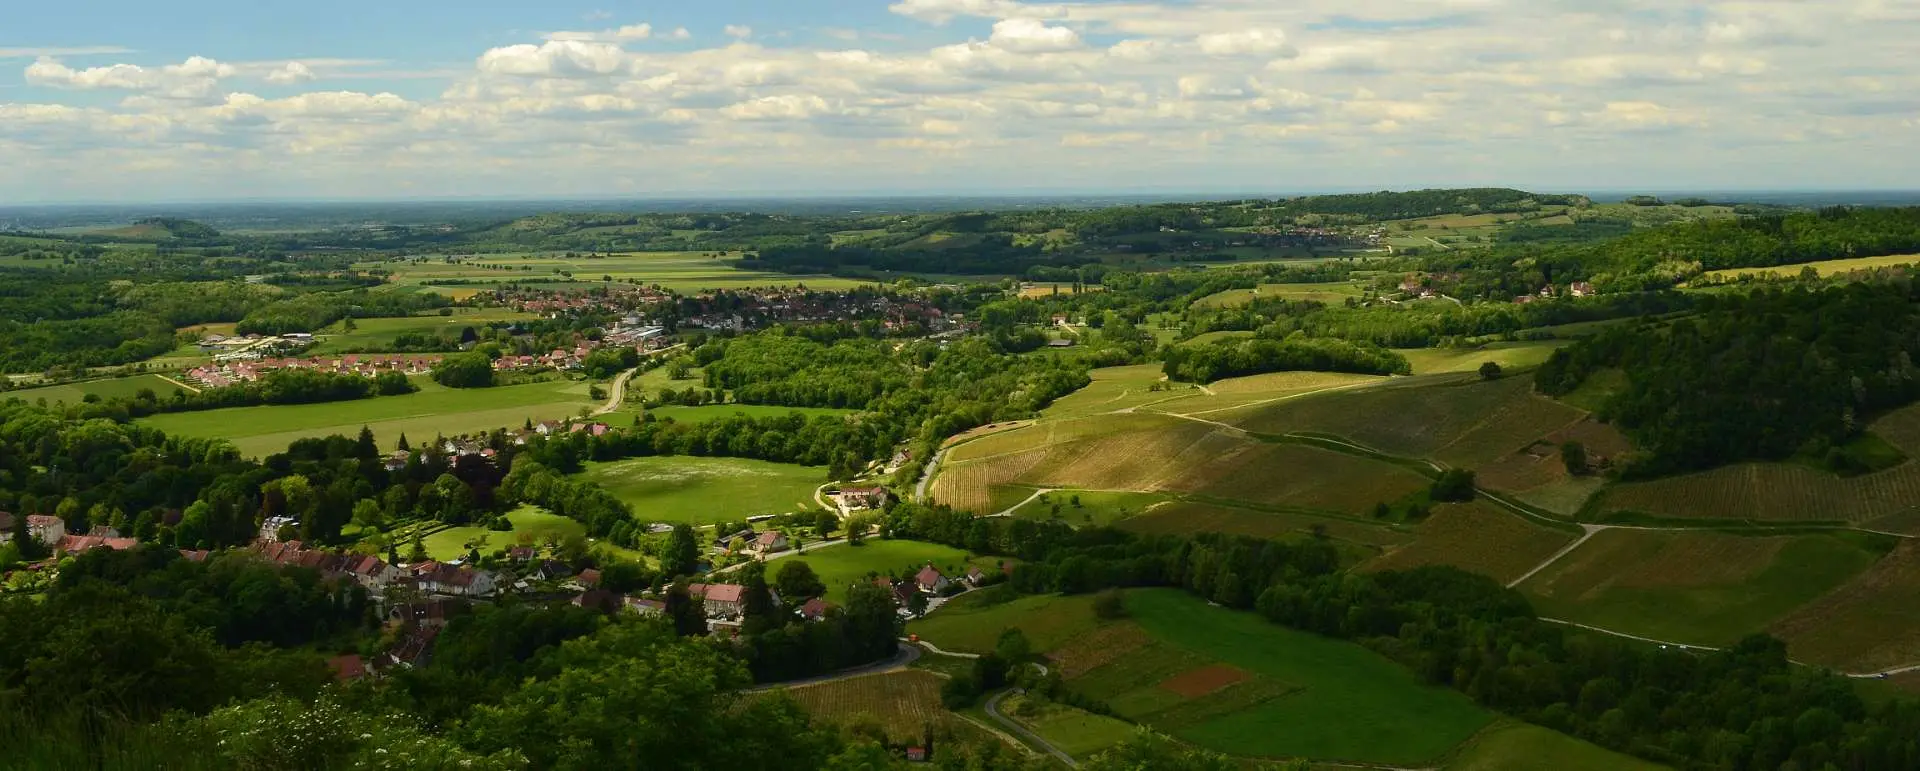 Bourgogne-Franche-Comté - the destination for group hotel for music groups